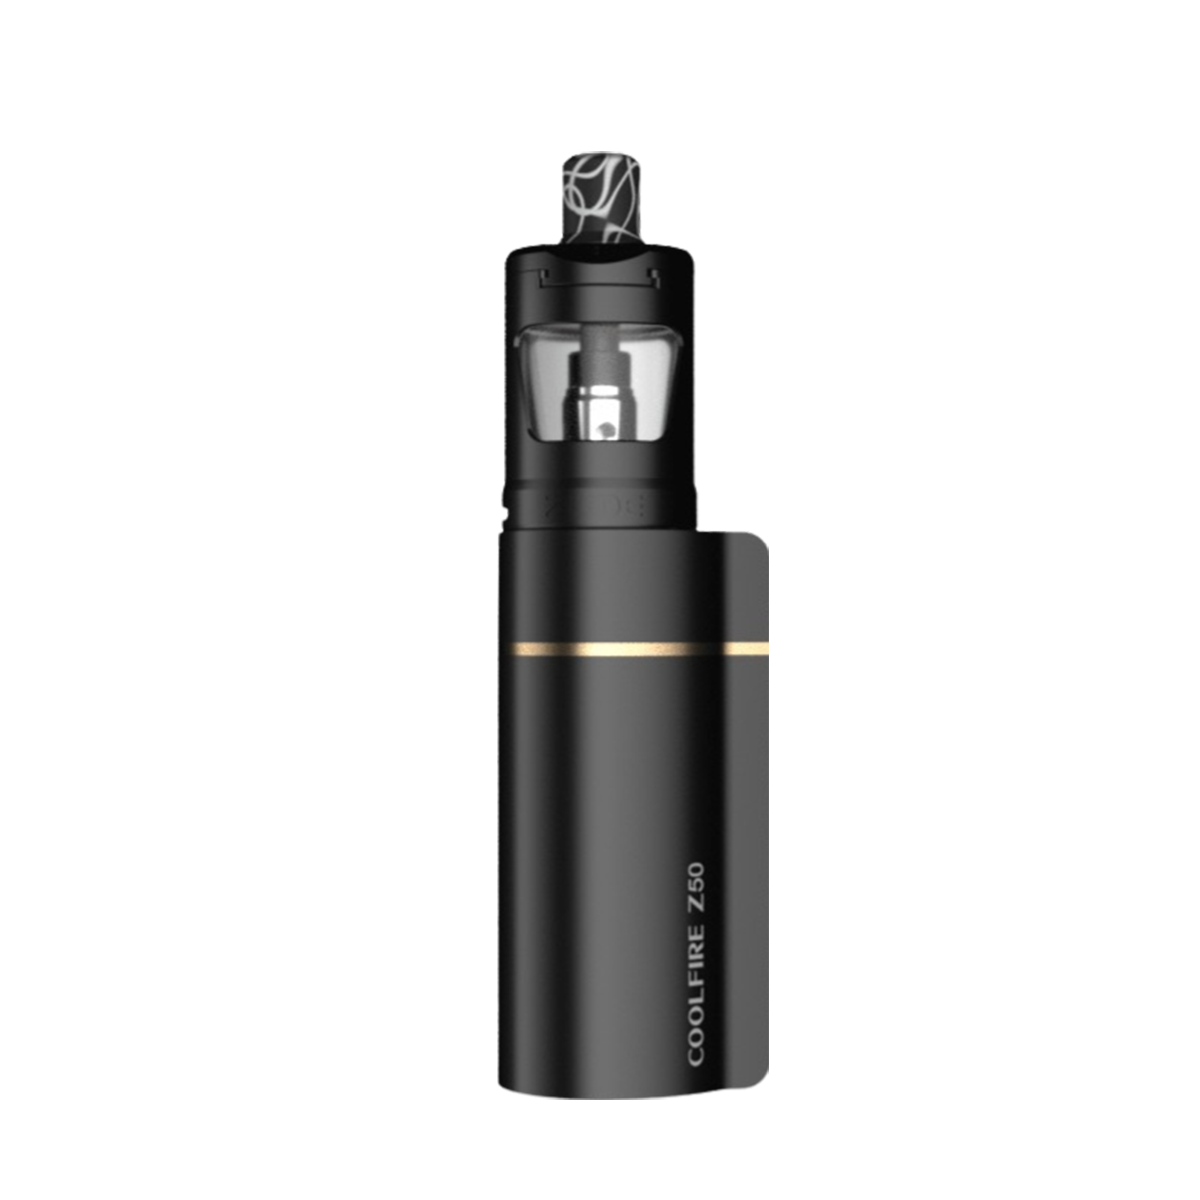 Innokin Coolfire Z50 Advanced Mod Kit Black  